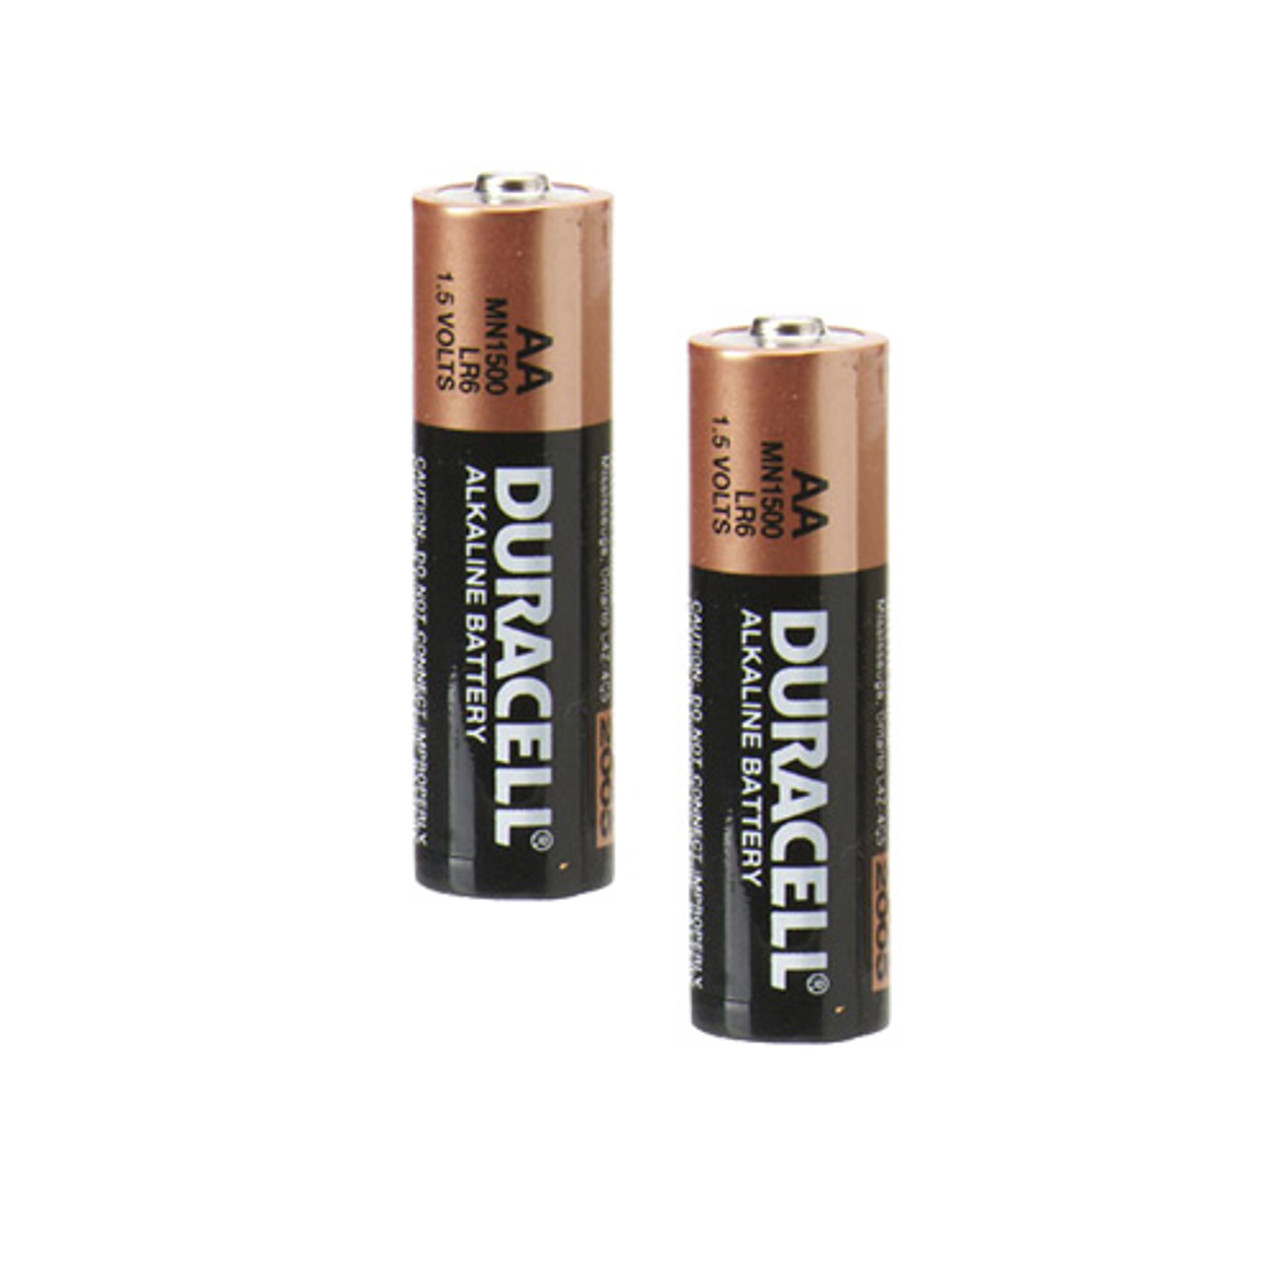 Duracell Alkaline AA Batteries Pack of 5